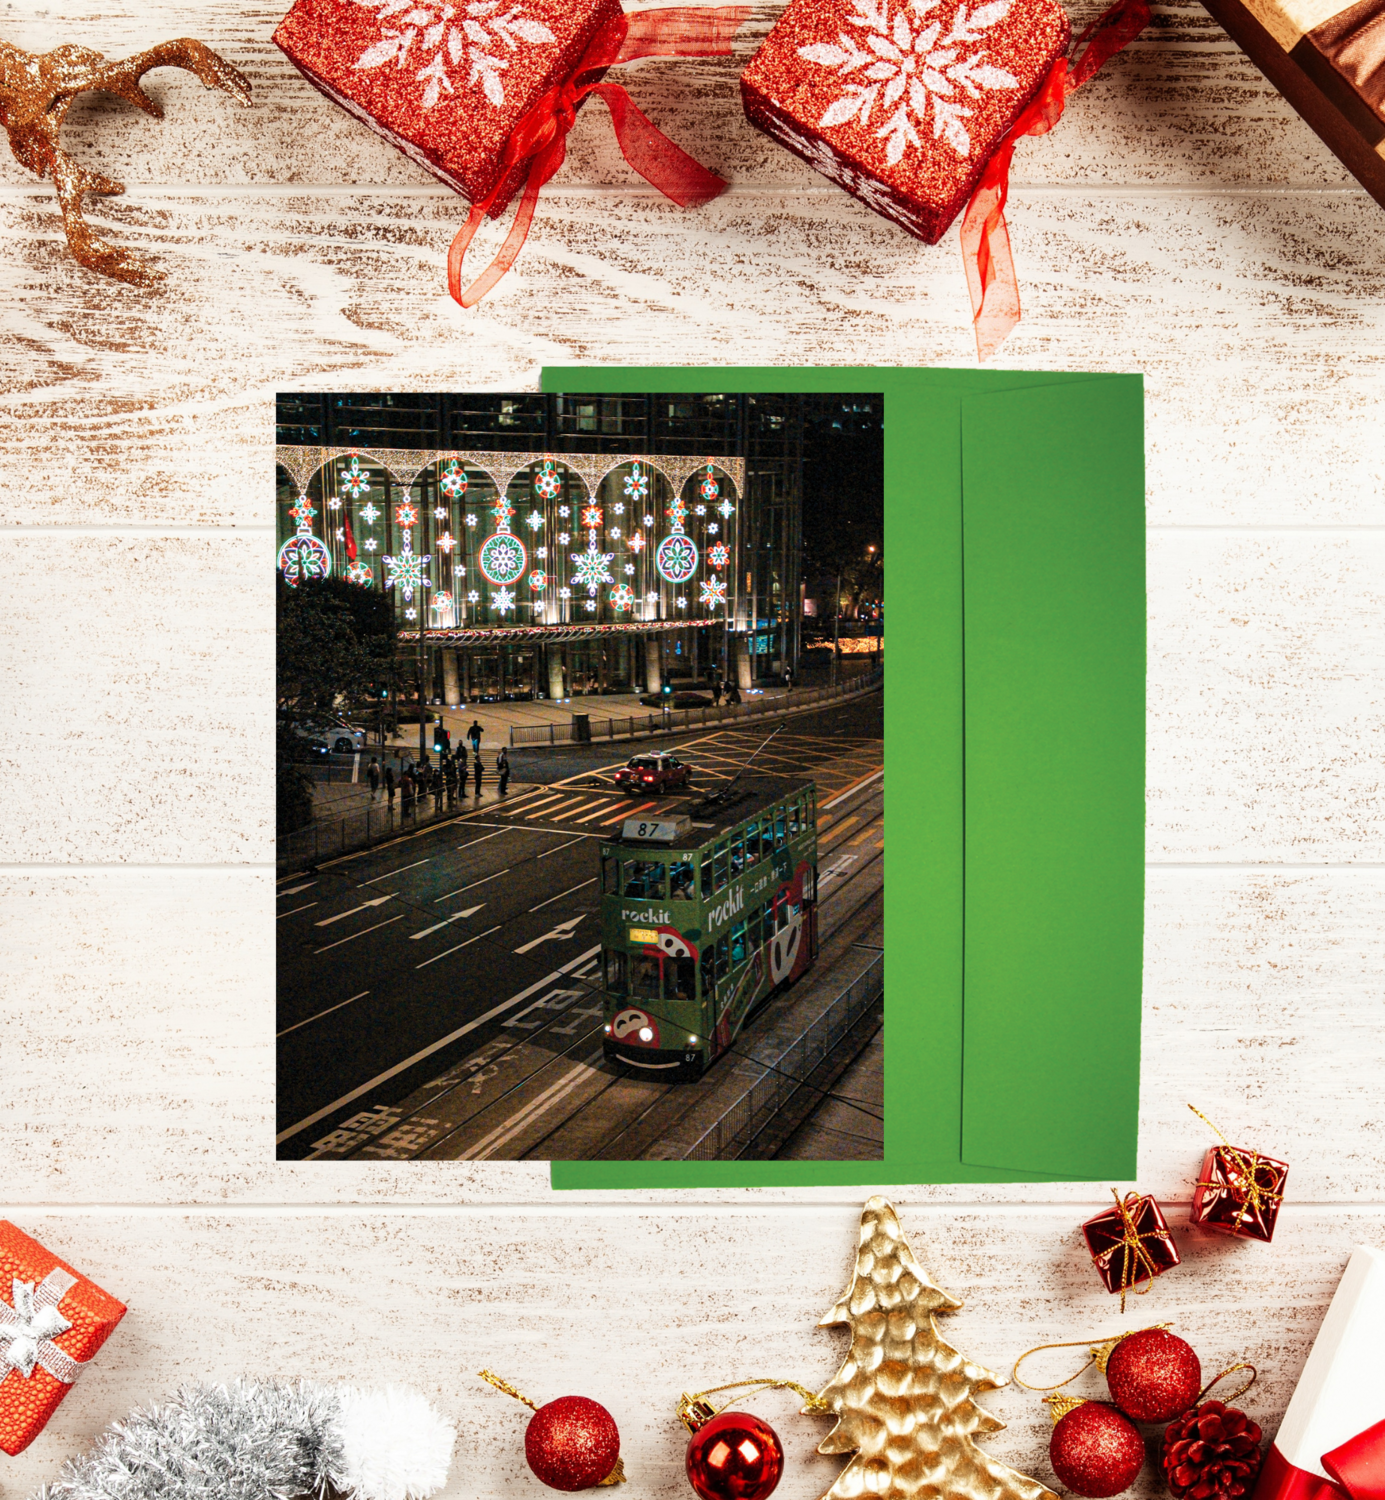 2022 HK Christmas Card 2: Tram passing through Christmas Lights